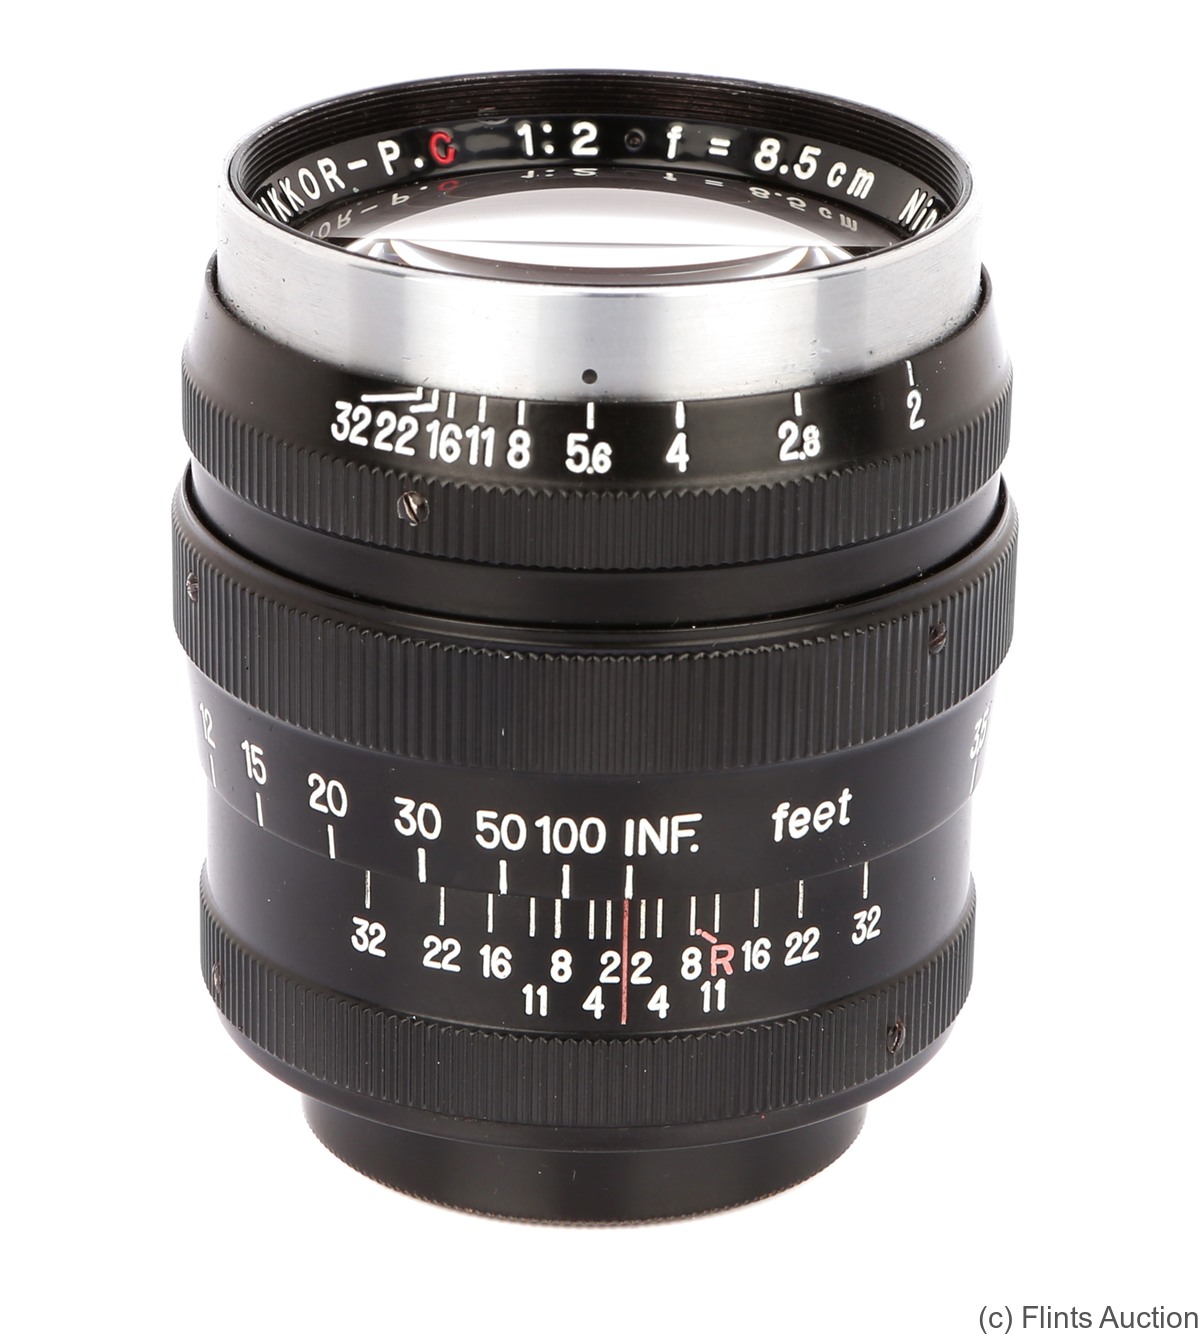 Nikon: 85mm (8.5cm) f2 Nikkor-P.C (M39, black) camera